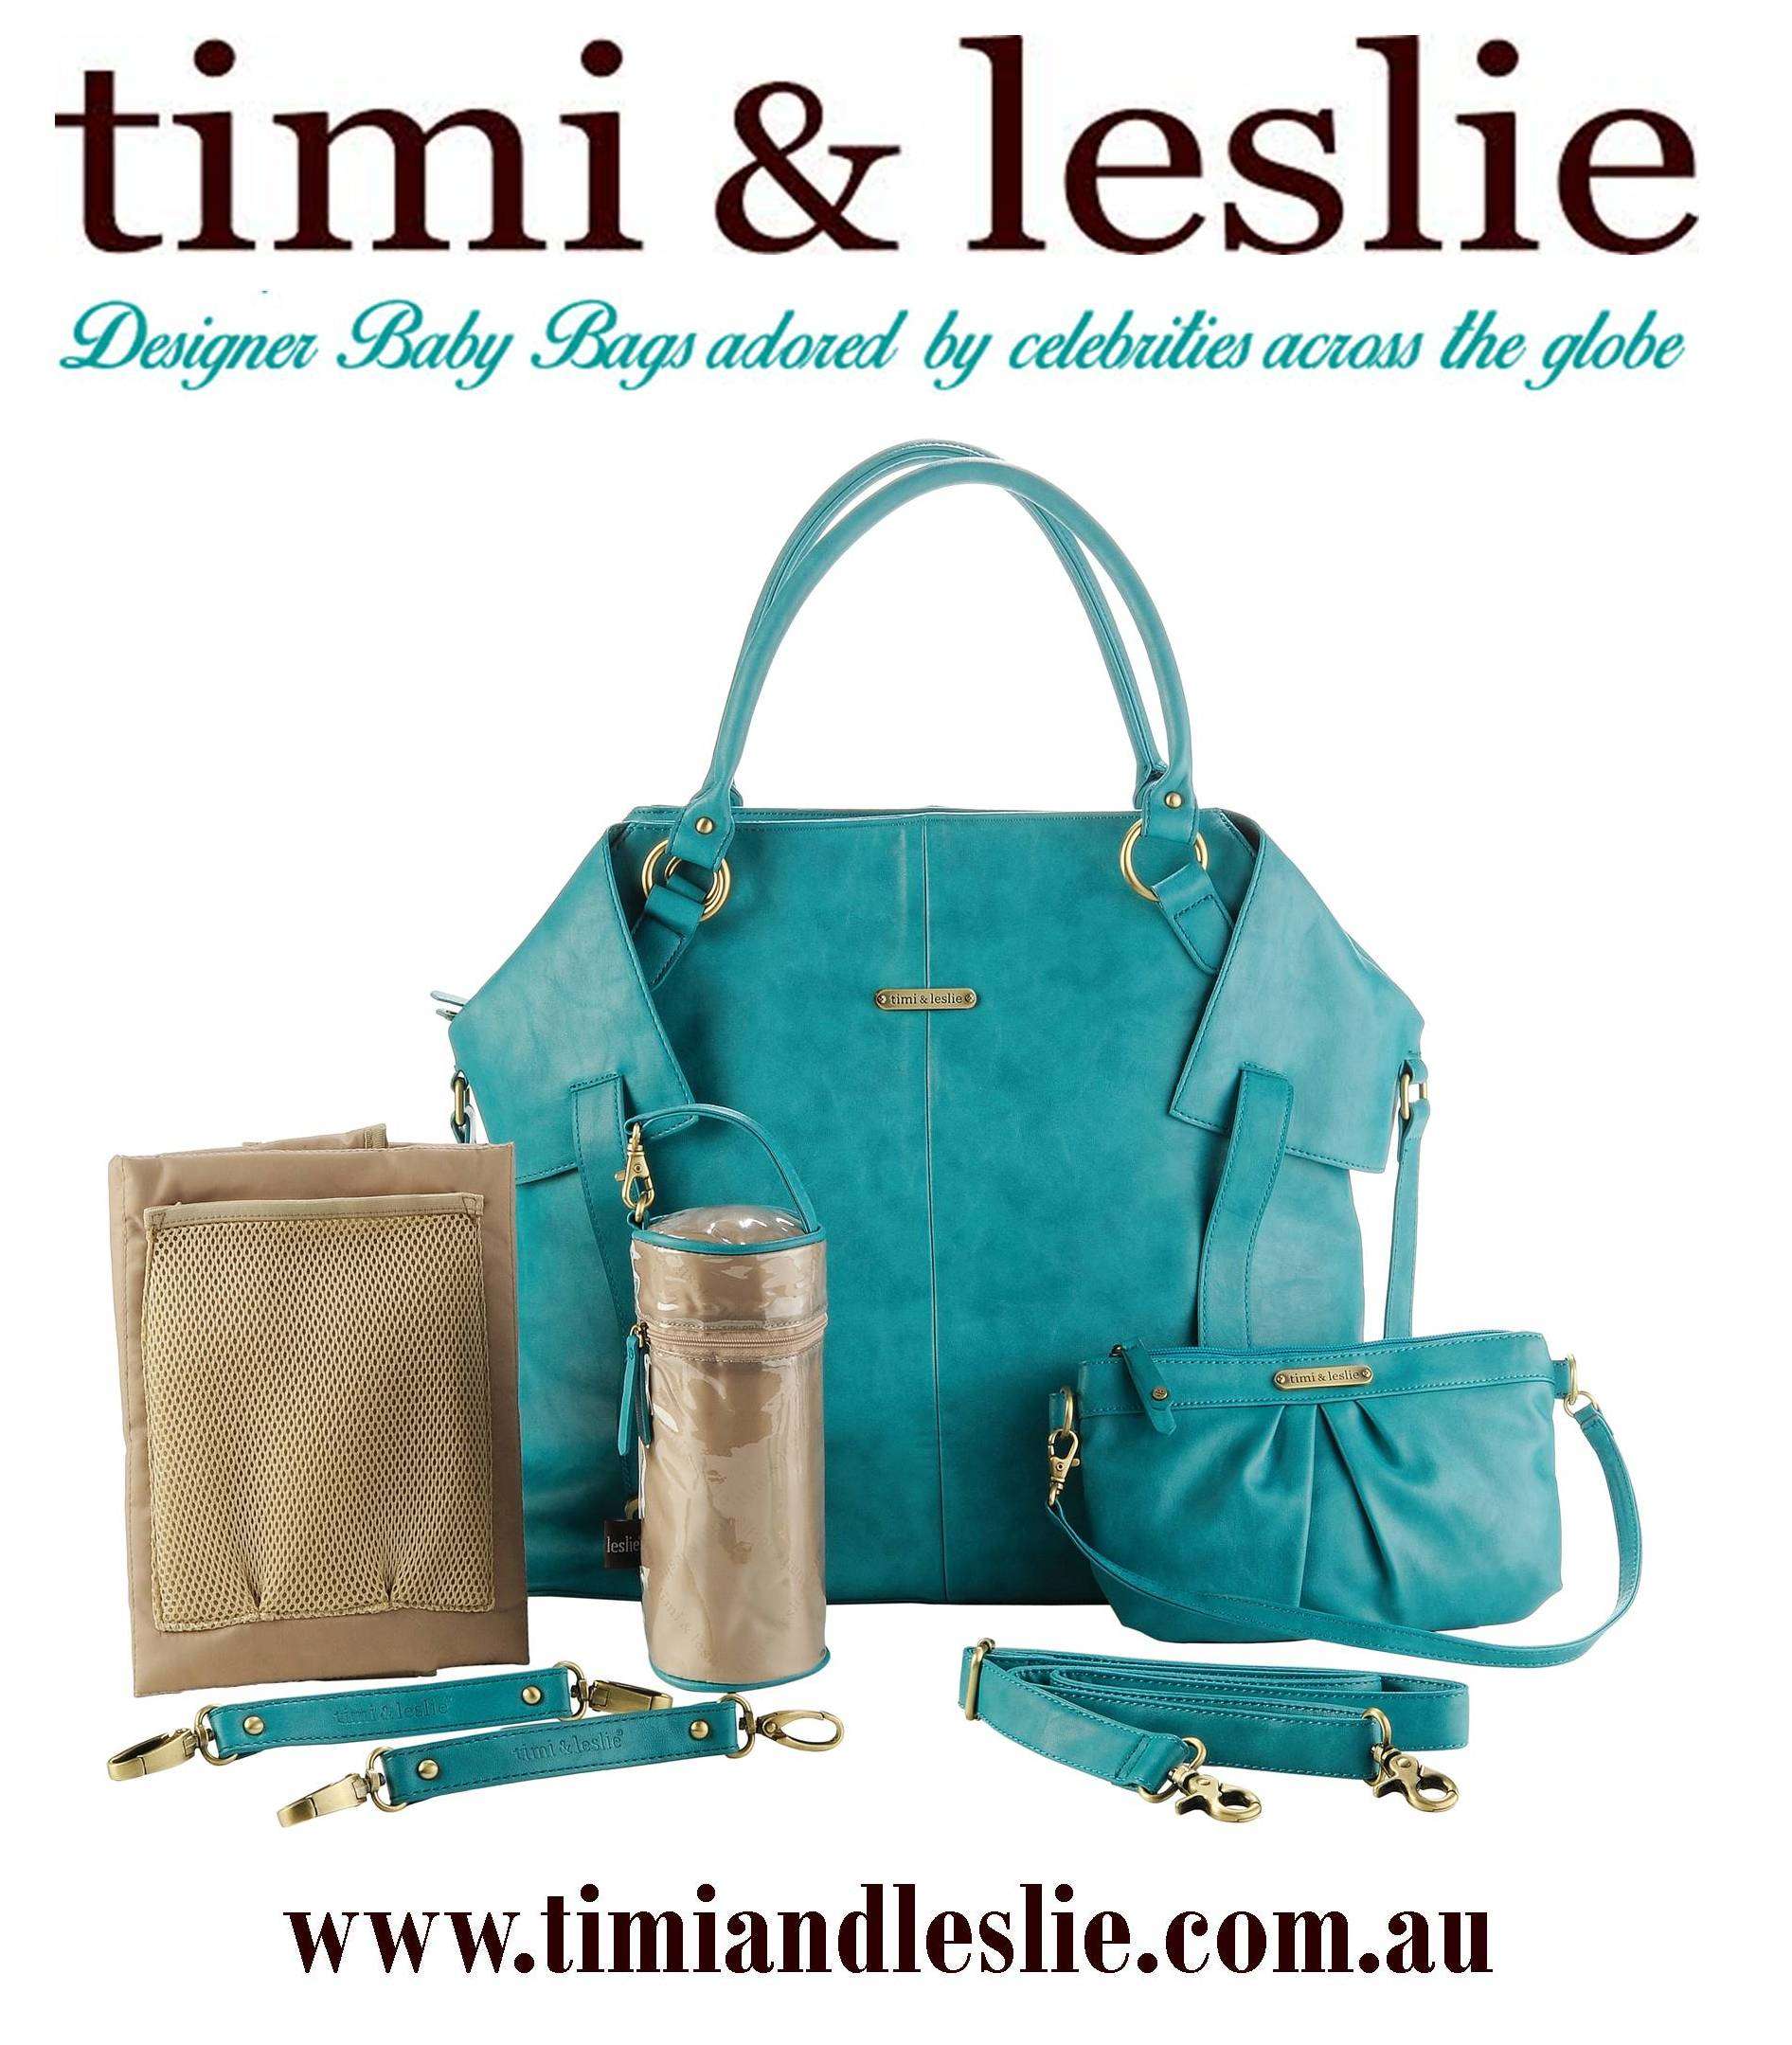 timi & leslie Celebrity Nappy Bags - Crunchbase Company Profile